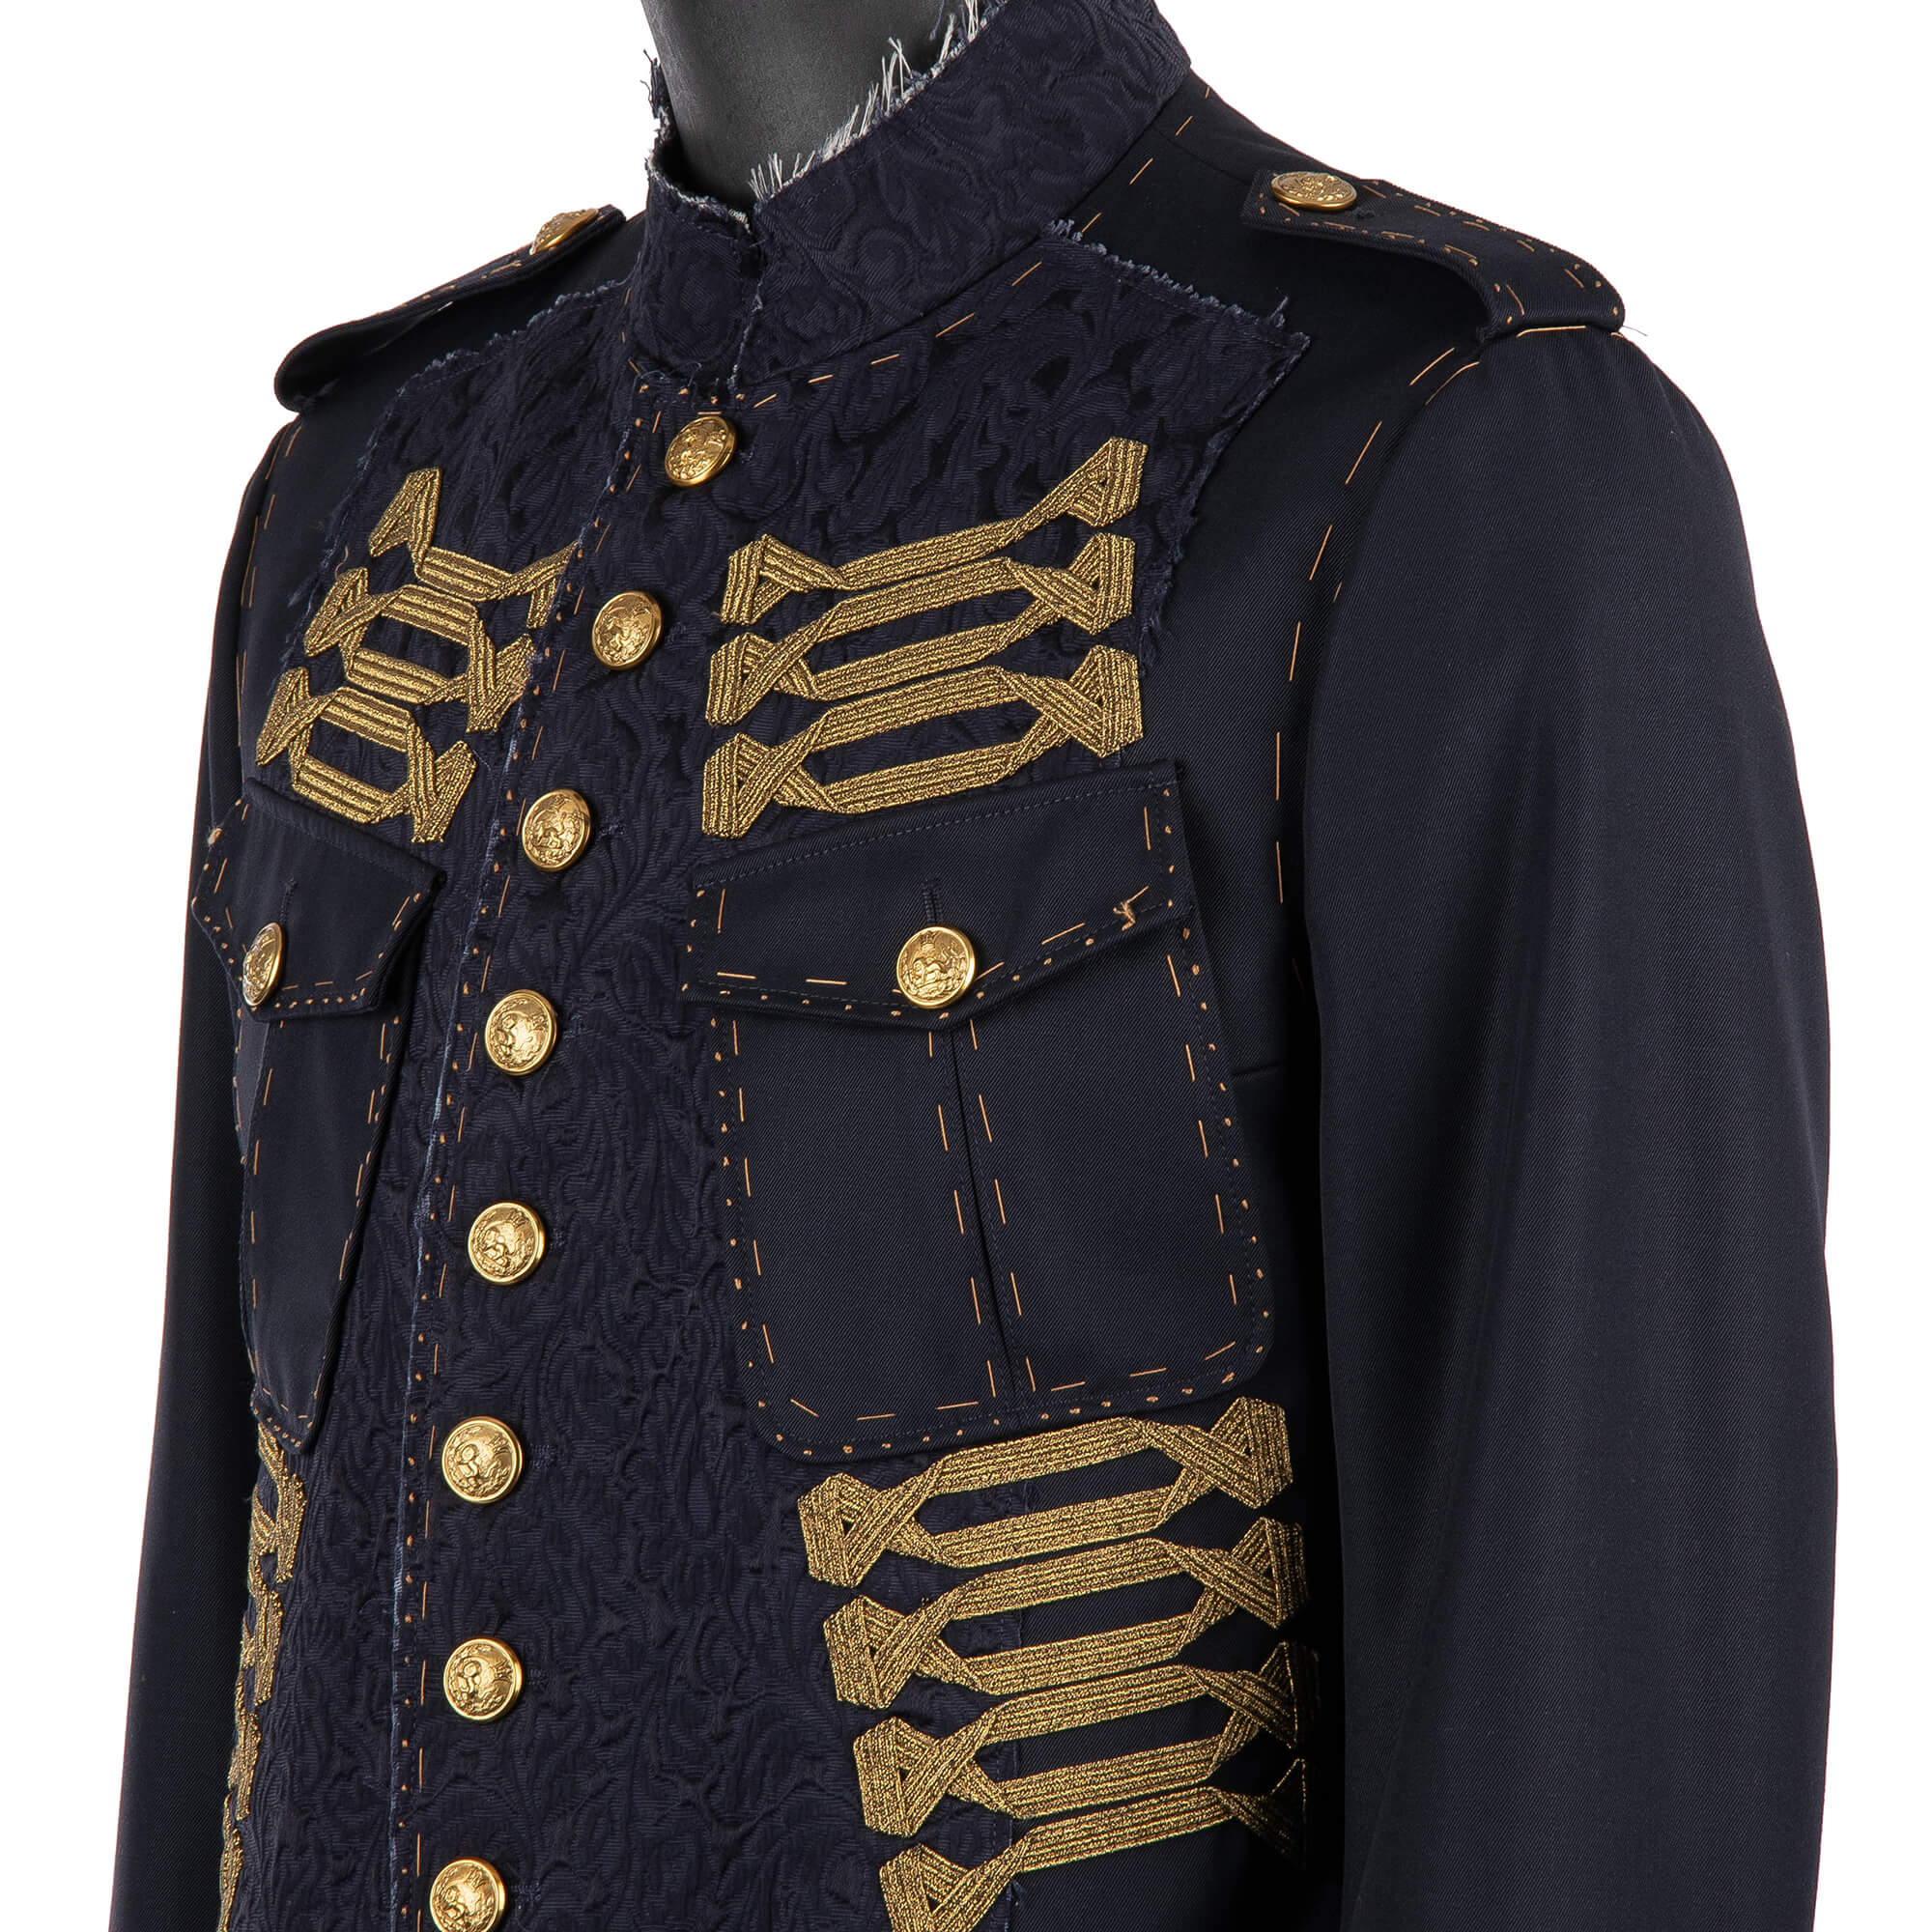 DOLCE-GABBANA-Royal-Military-Uniform-Short-Jacket-Blue-Gold-5.jpg